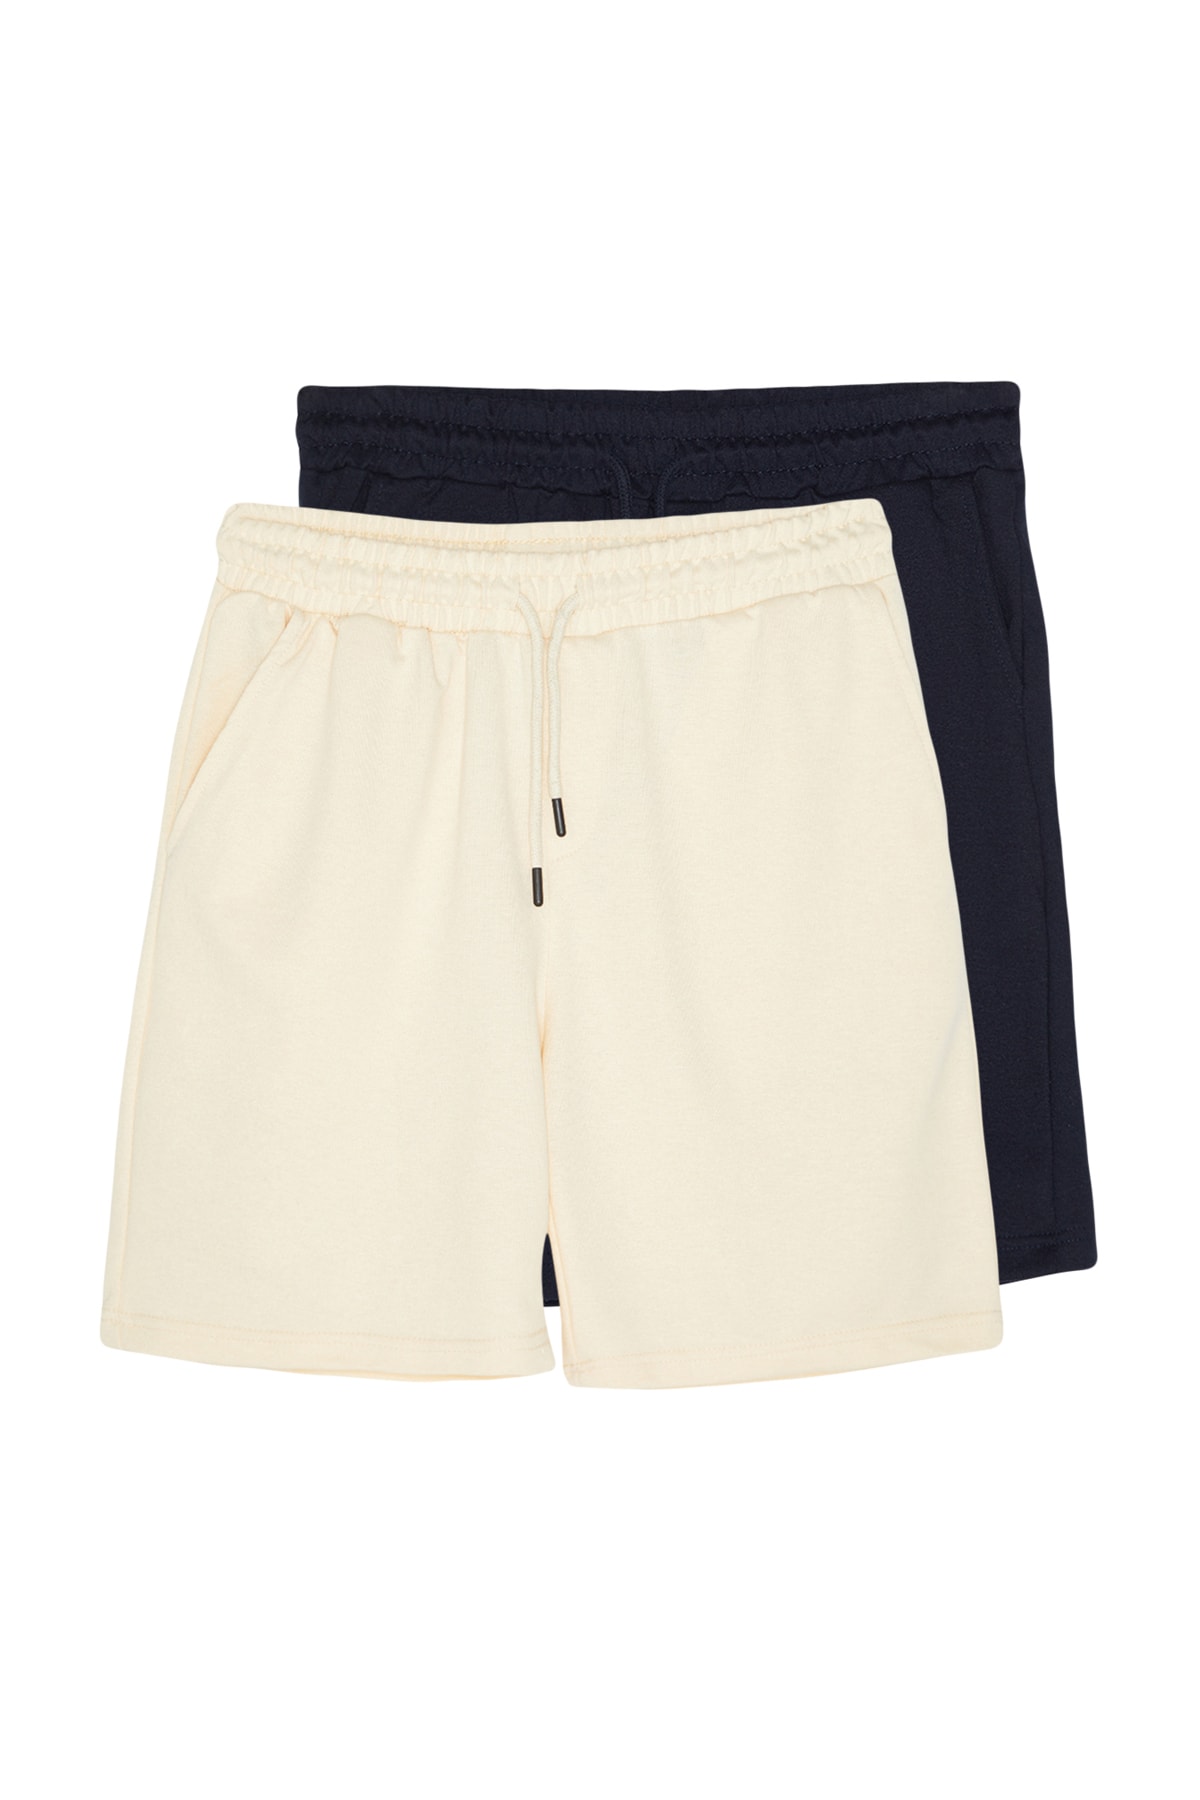 Trendyol Navy Blue-Stone Basic Regular Cut 2 Pack Shorts